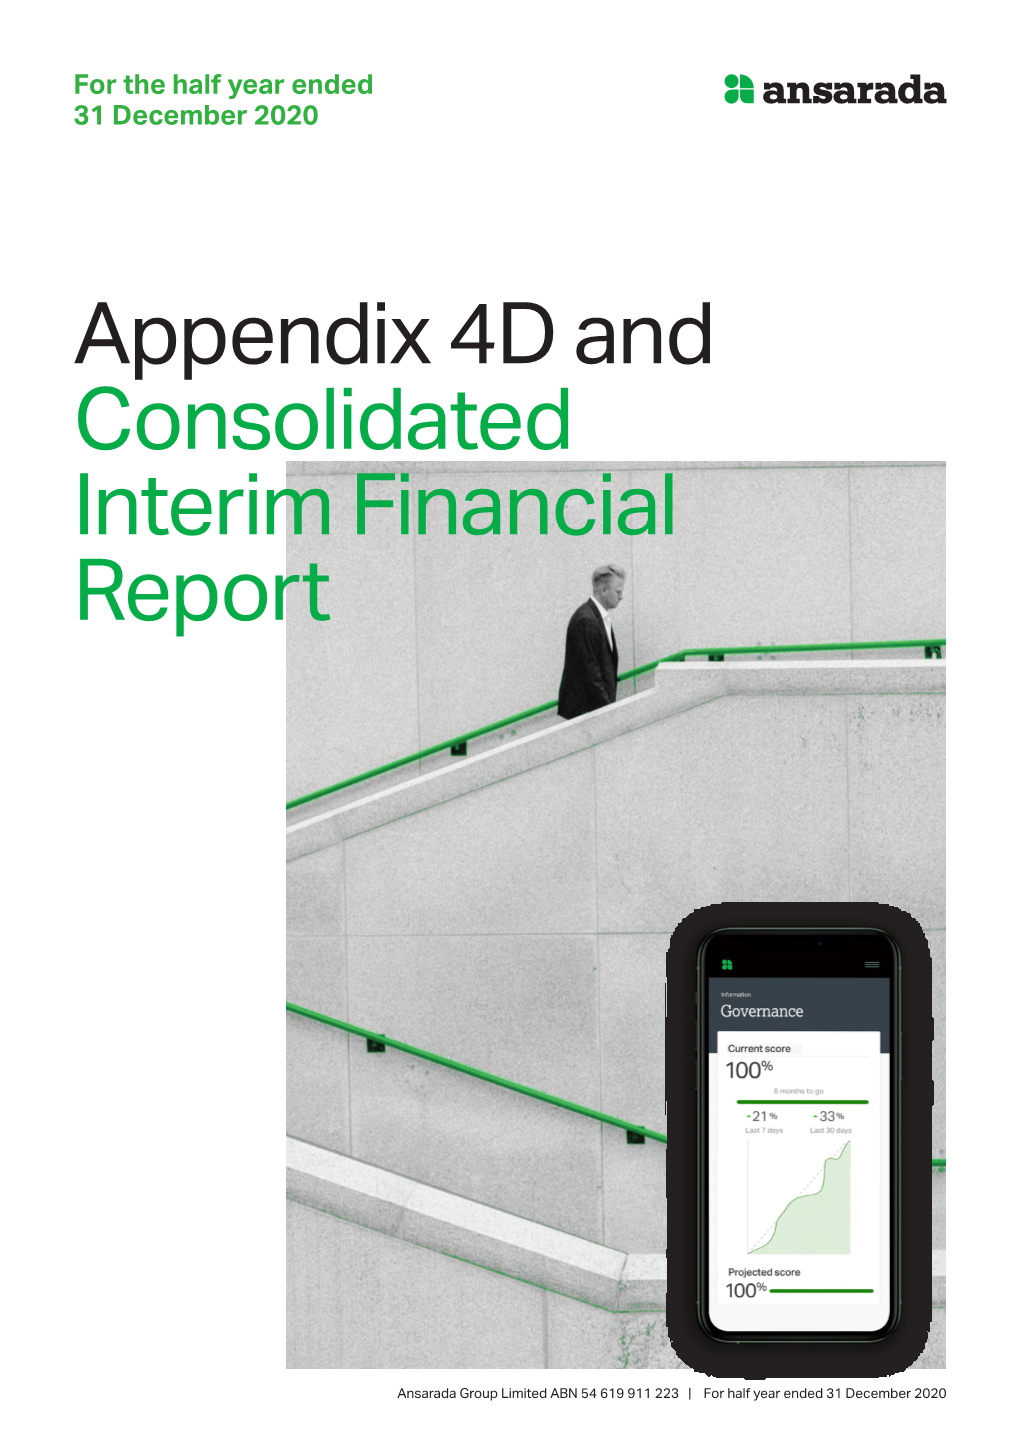 Appendix 4D and Consolidated Interim Financial Report